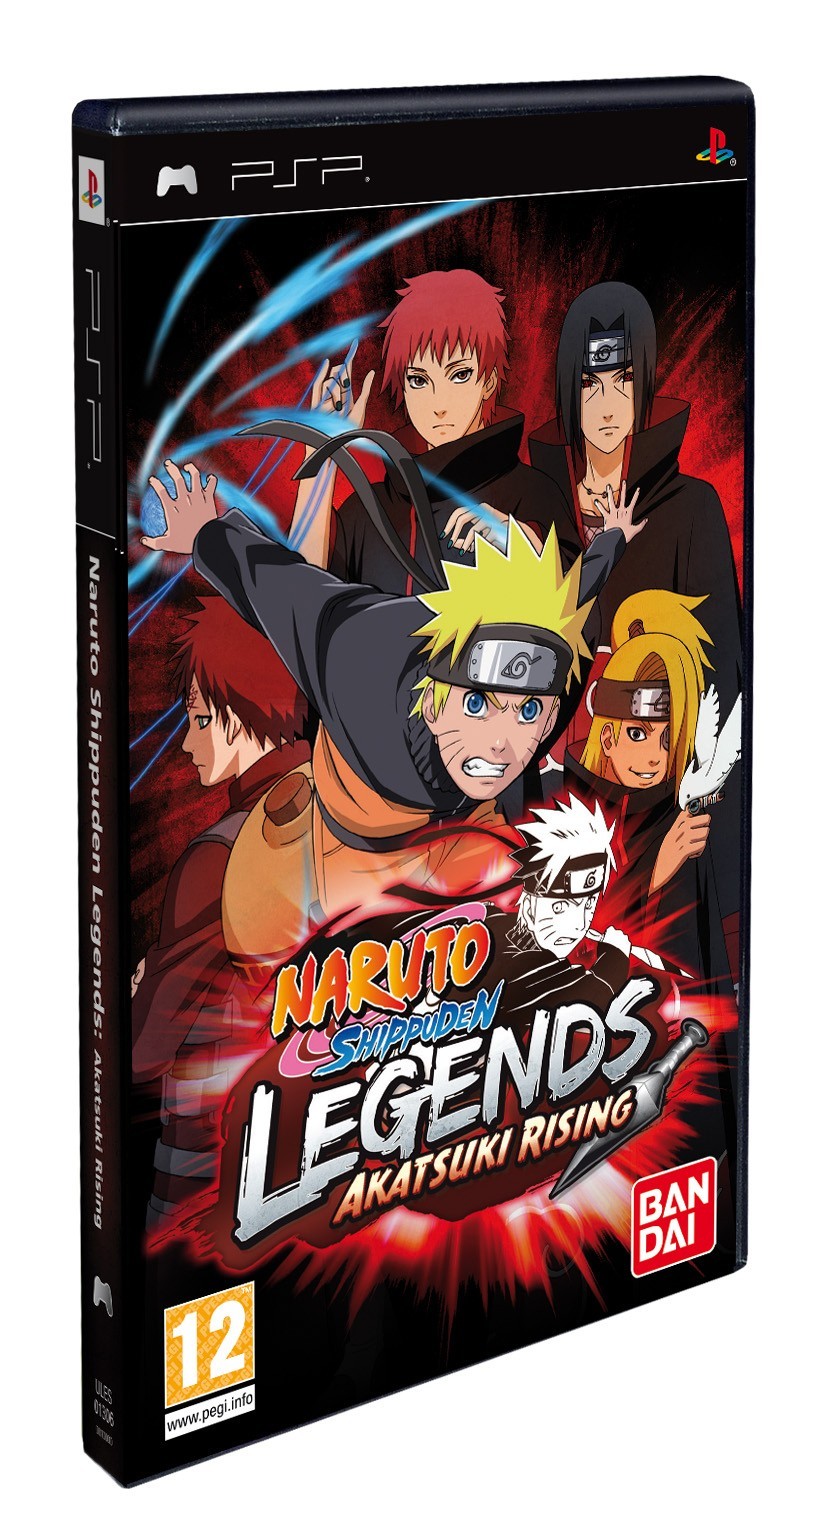 Jaquettes Naruto Shippuden Legends Akatsuki Rising